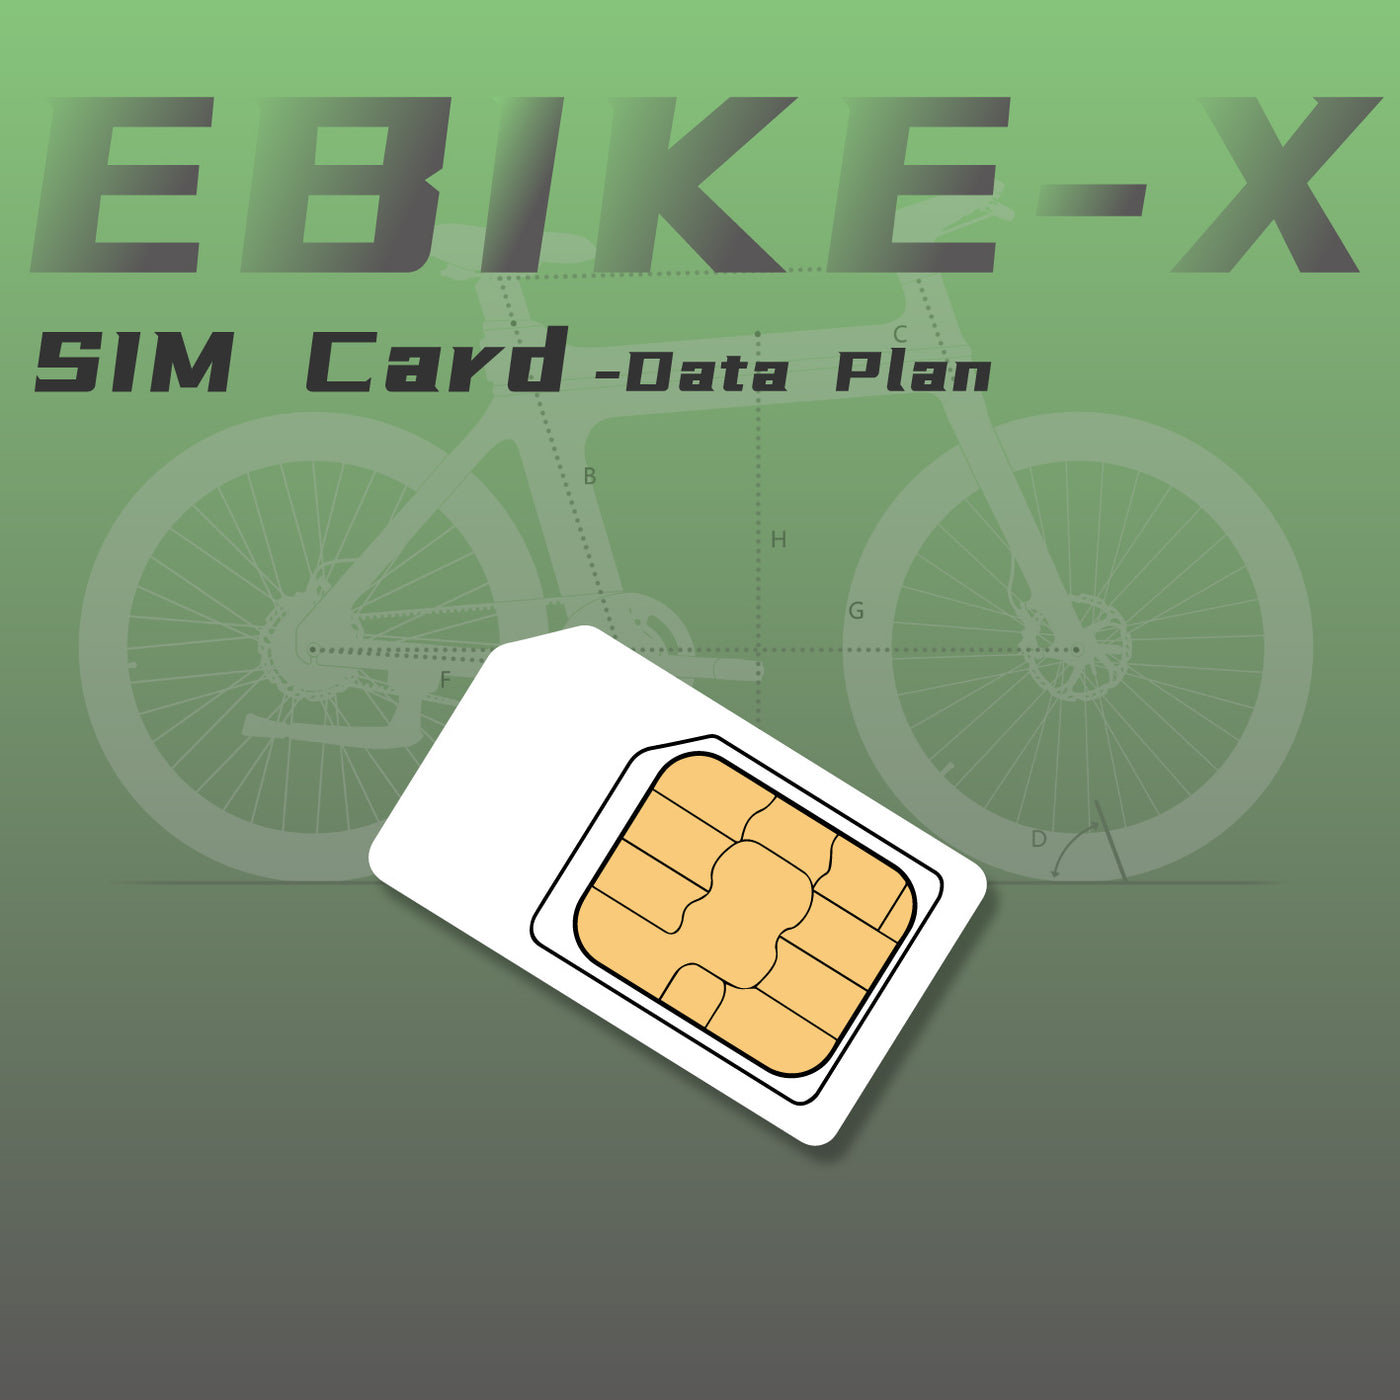 Ebike-X SIM Card Data Plan